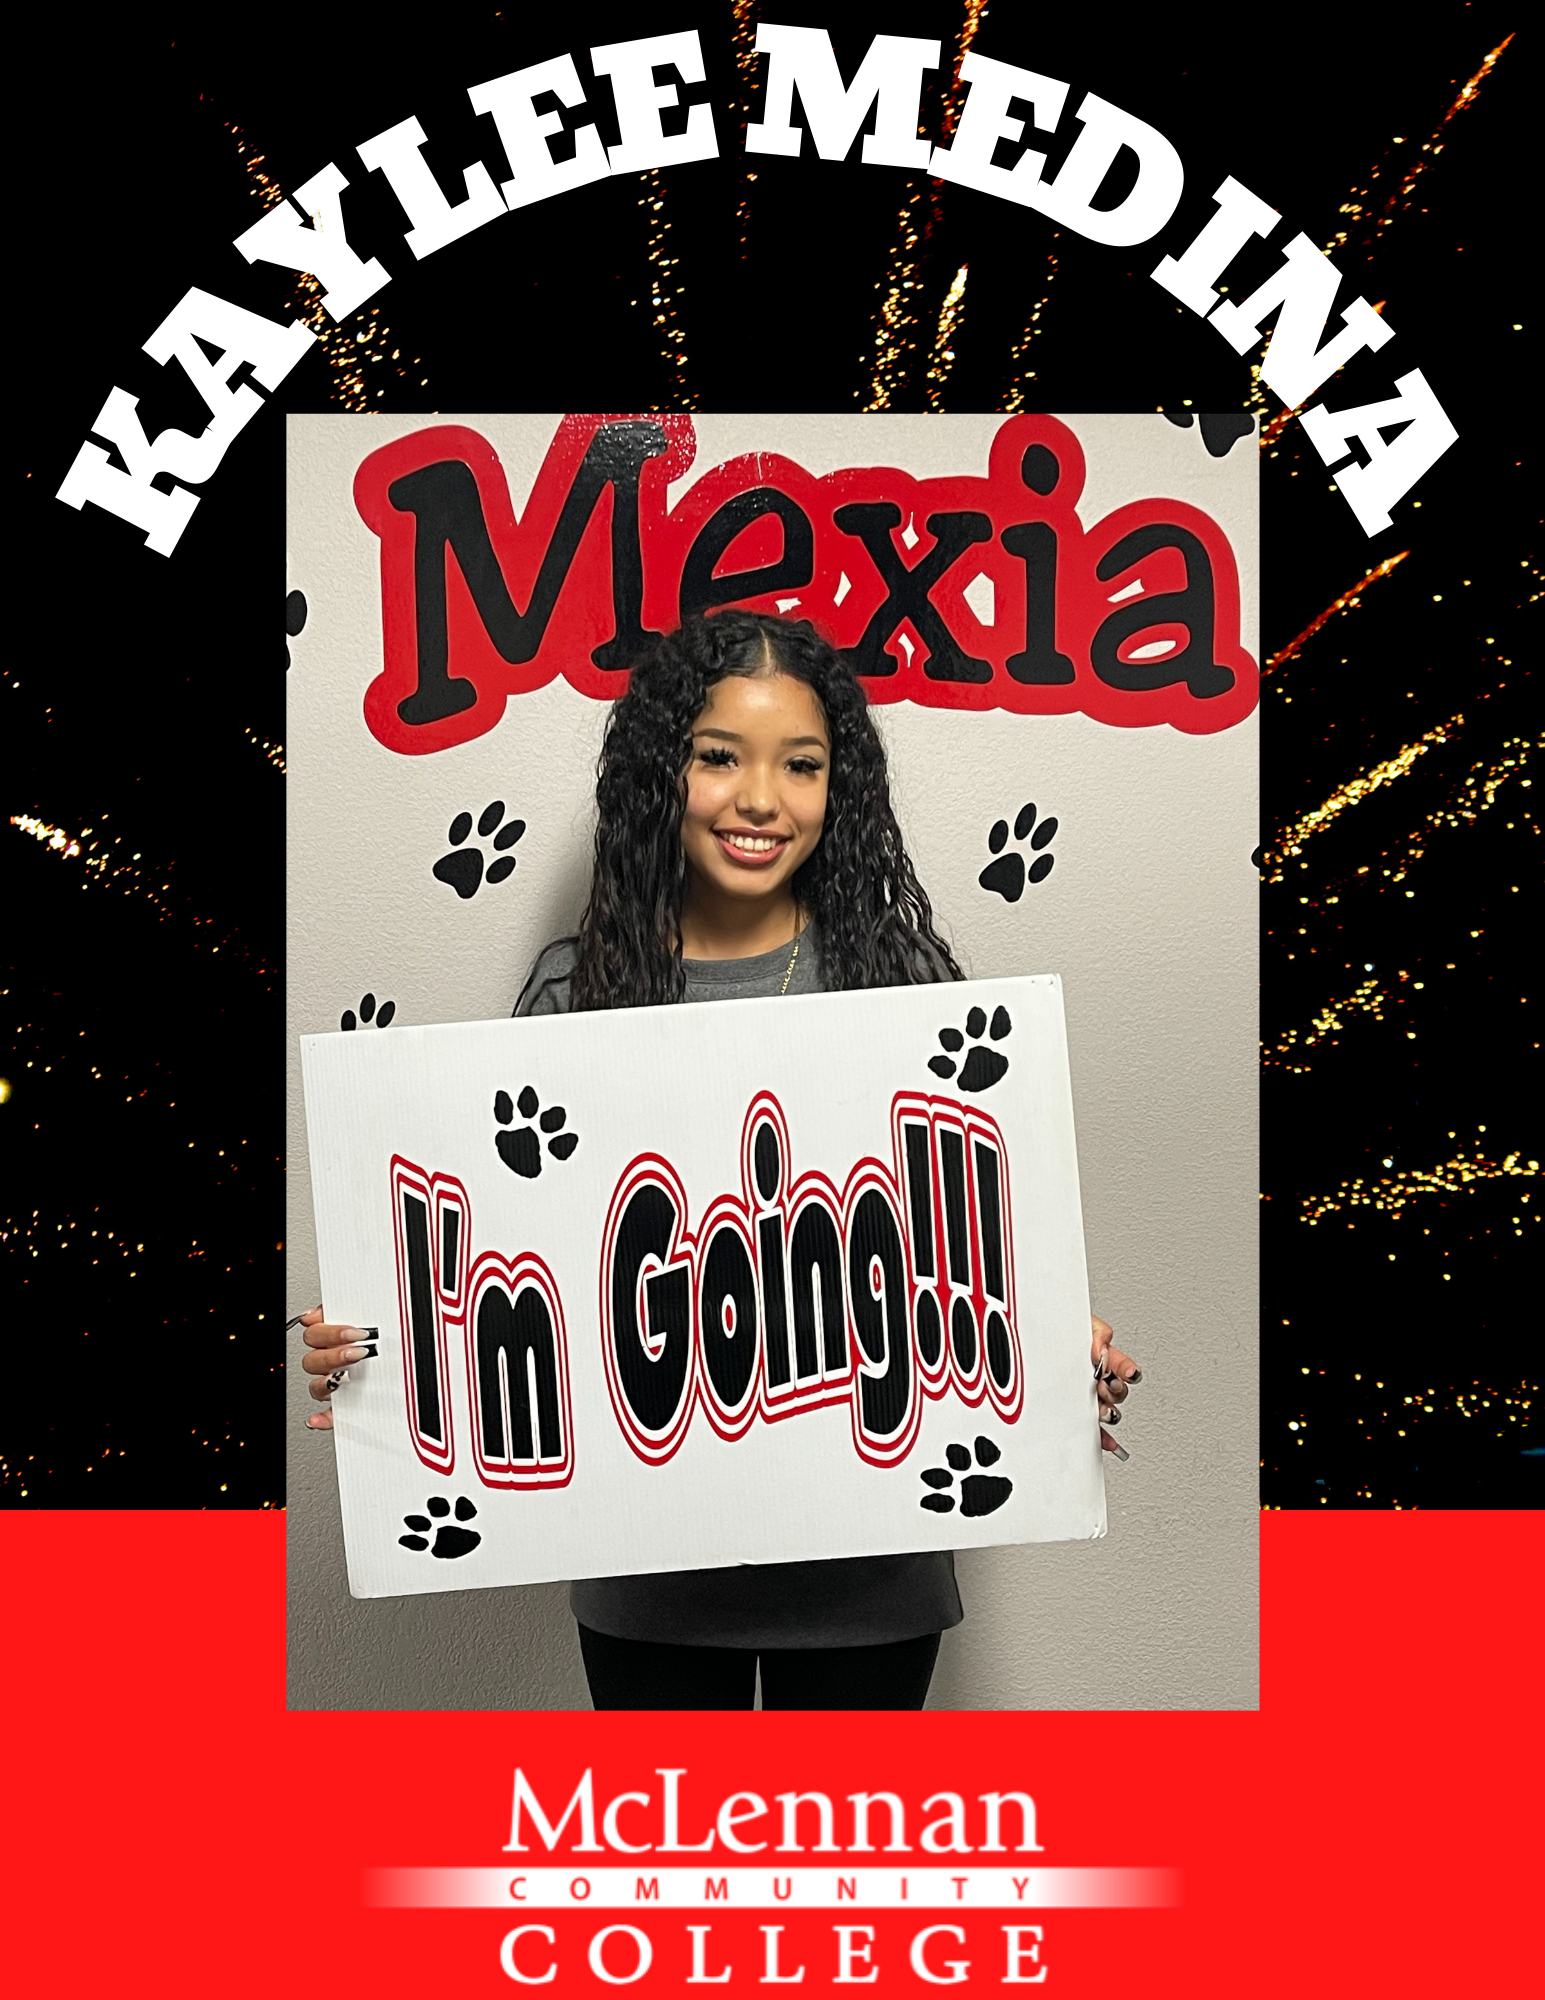 Kaylee Medina - I'm Going! - McLennan Community College